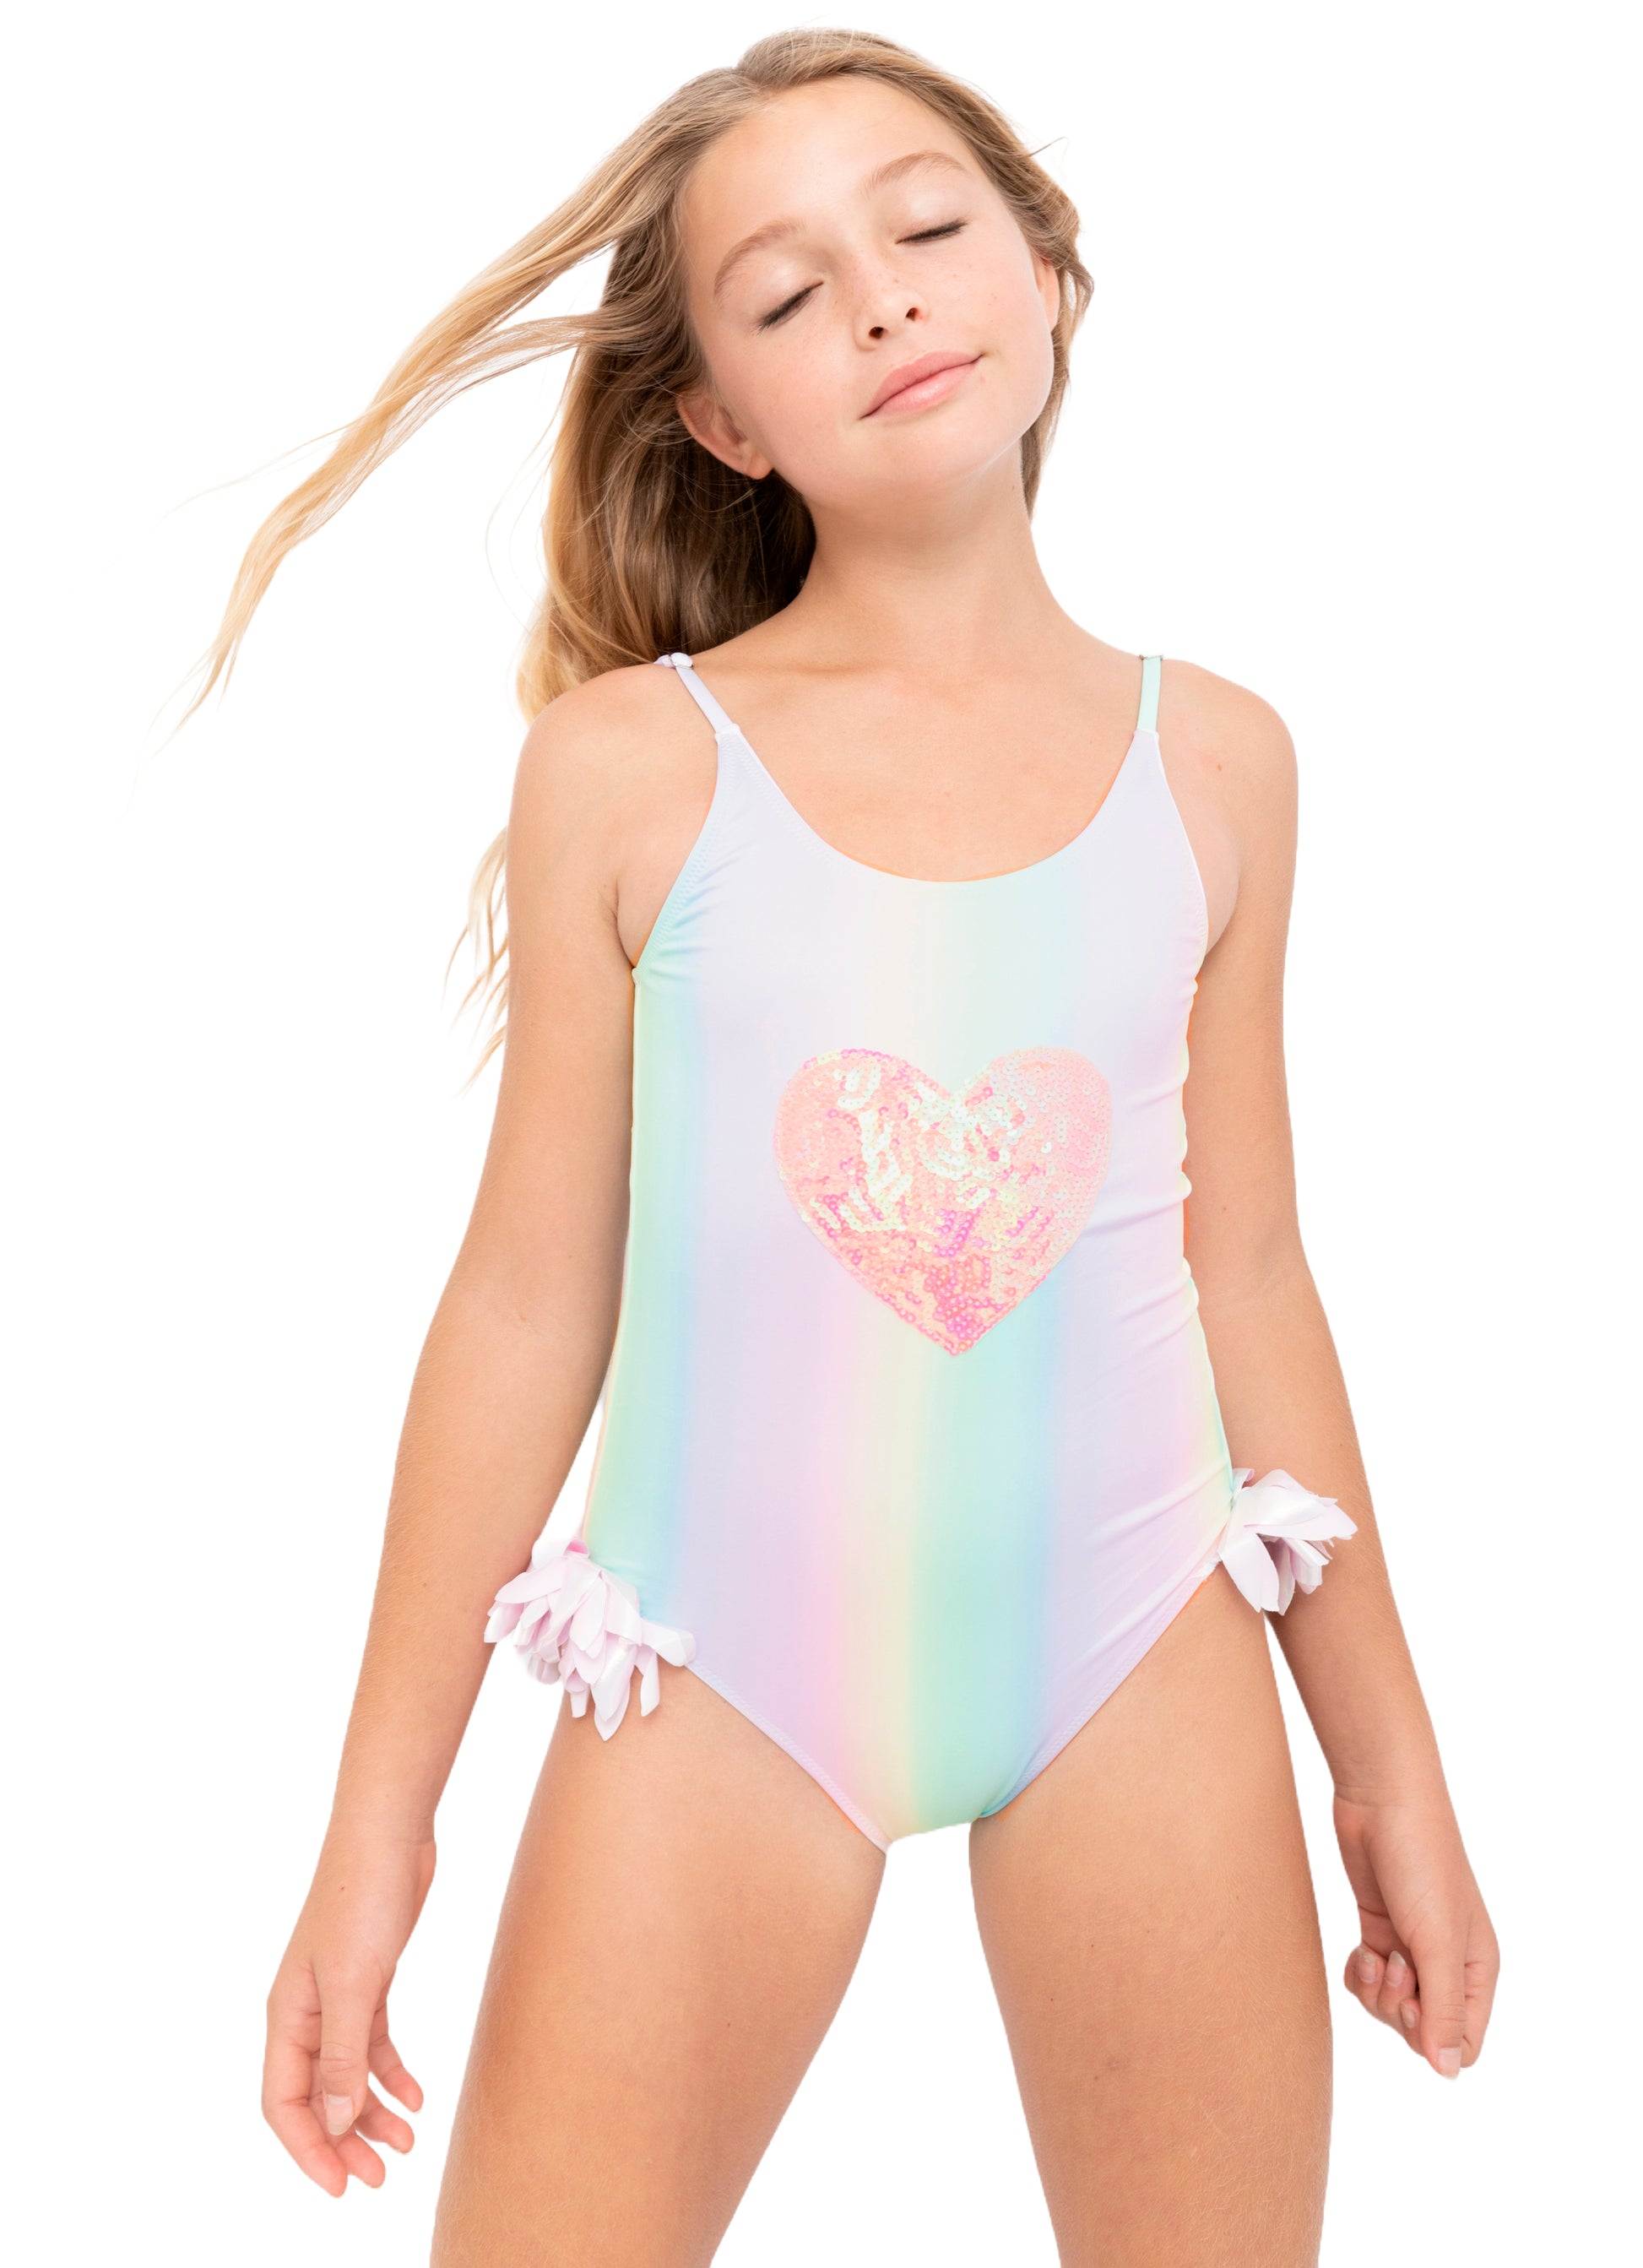 rainbow swimsuit for girls, rainbow bathing suit for girls, rainbow swimwear for girls